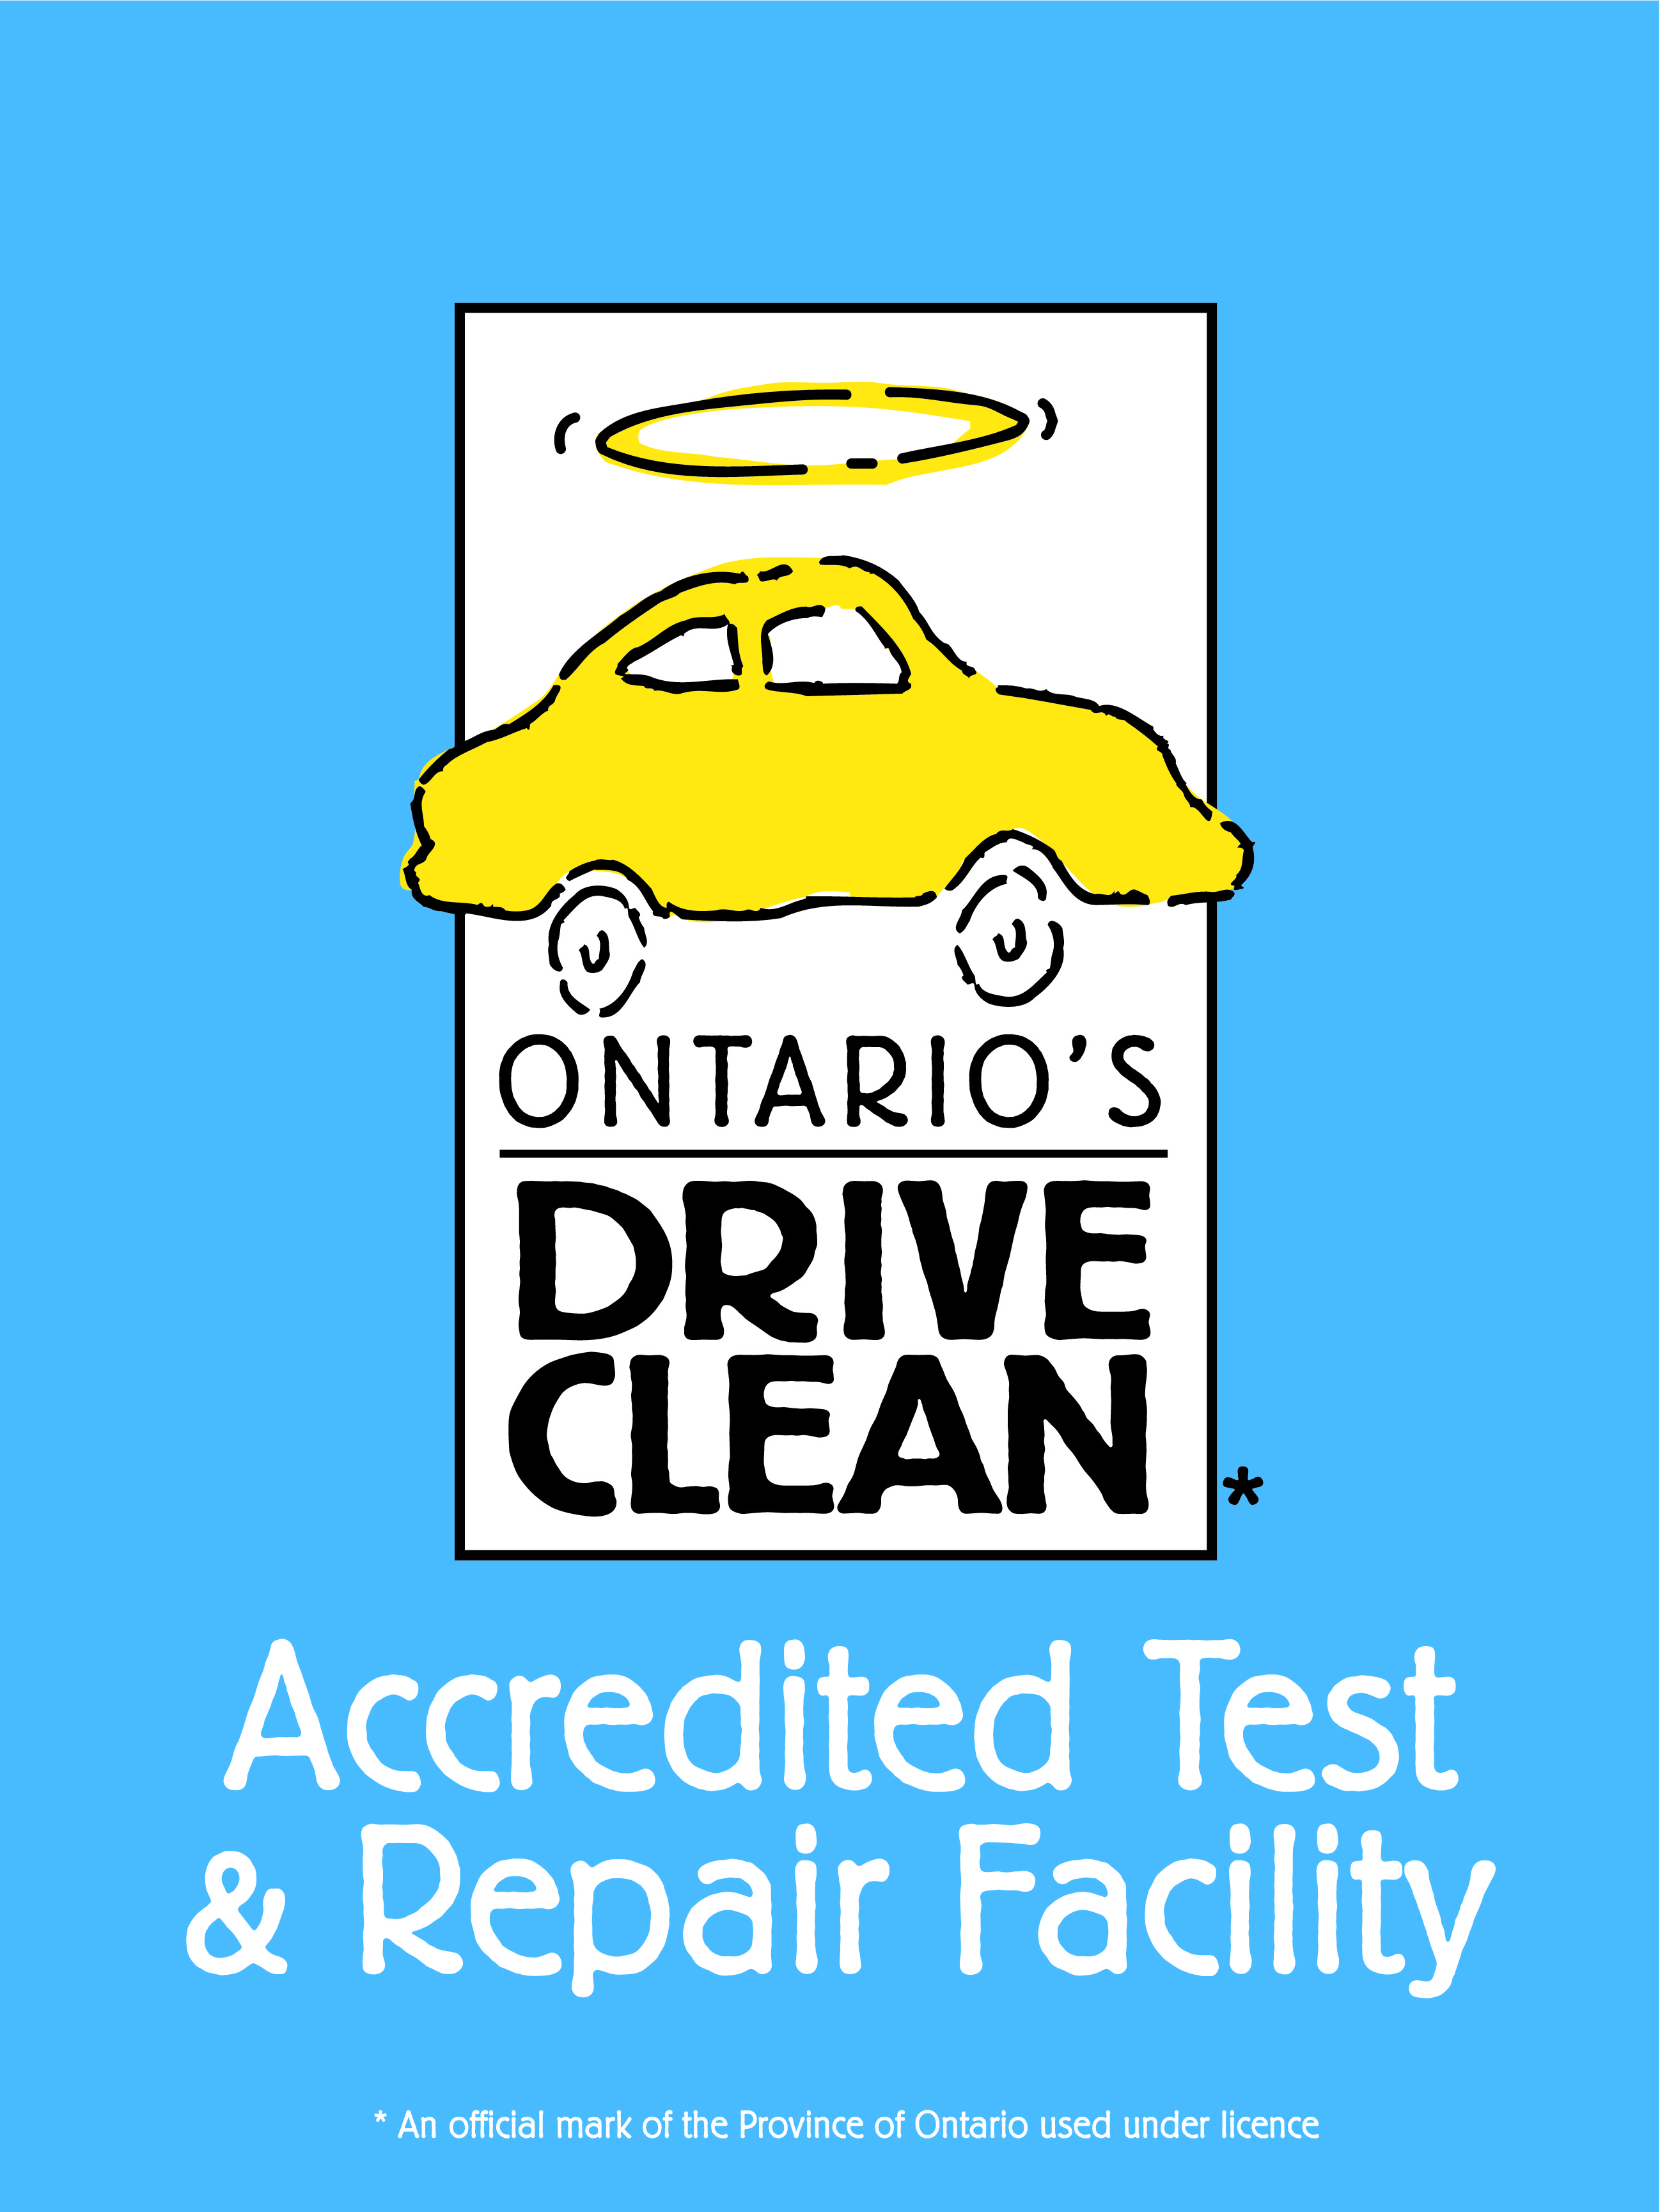 Ontarios Drive Clean Logo photo - 1